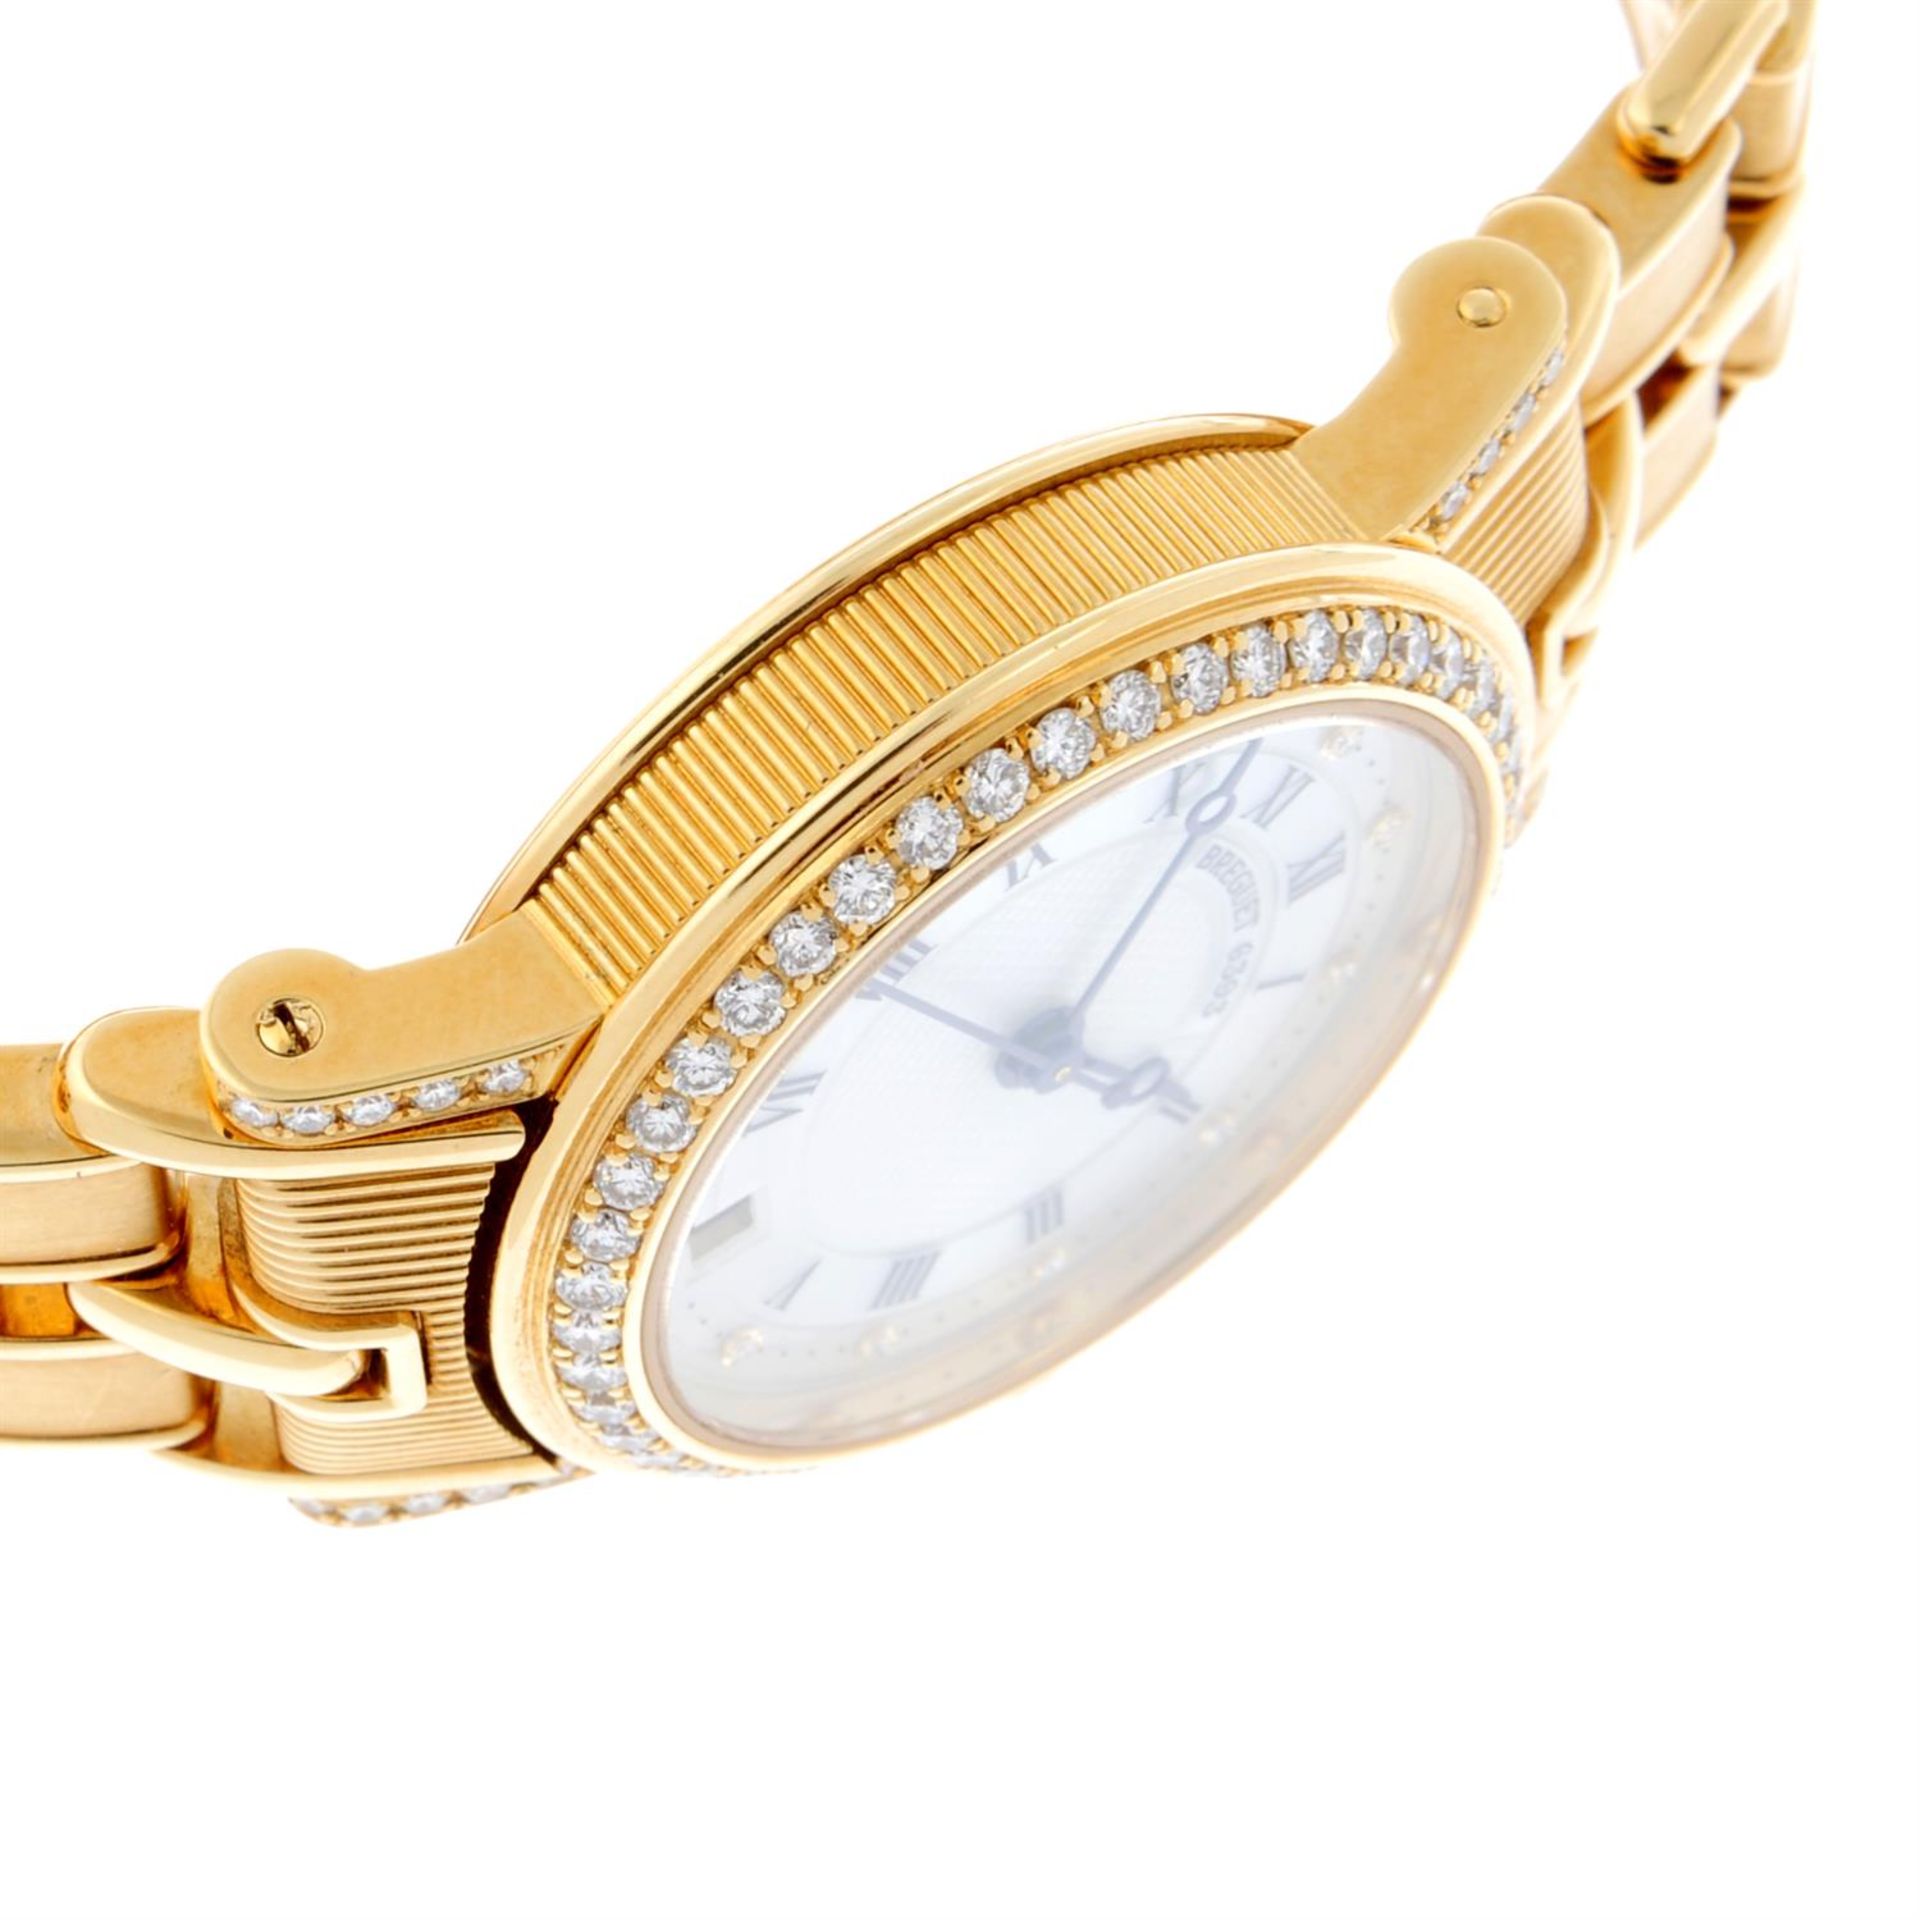 BREGUET - a diamond set 18ct yellow gold Horloger De La Marine bracelet watch, 26mm. - Image 4 of 7